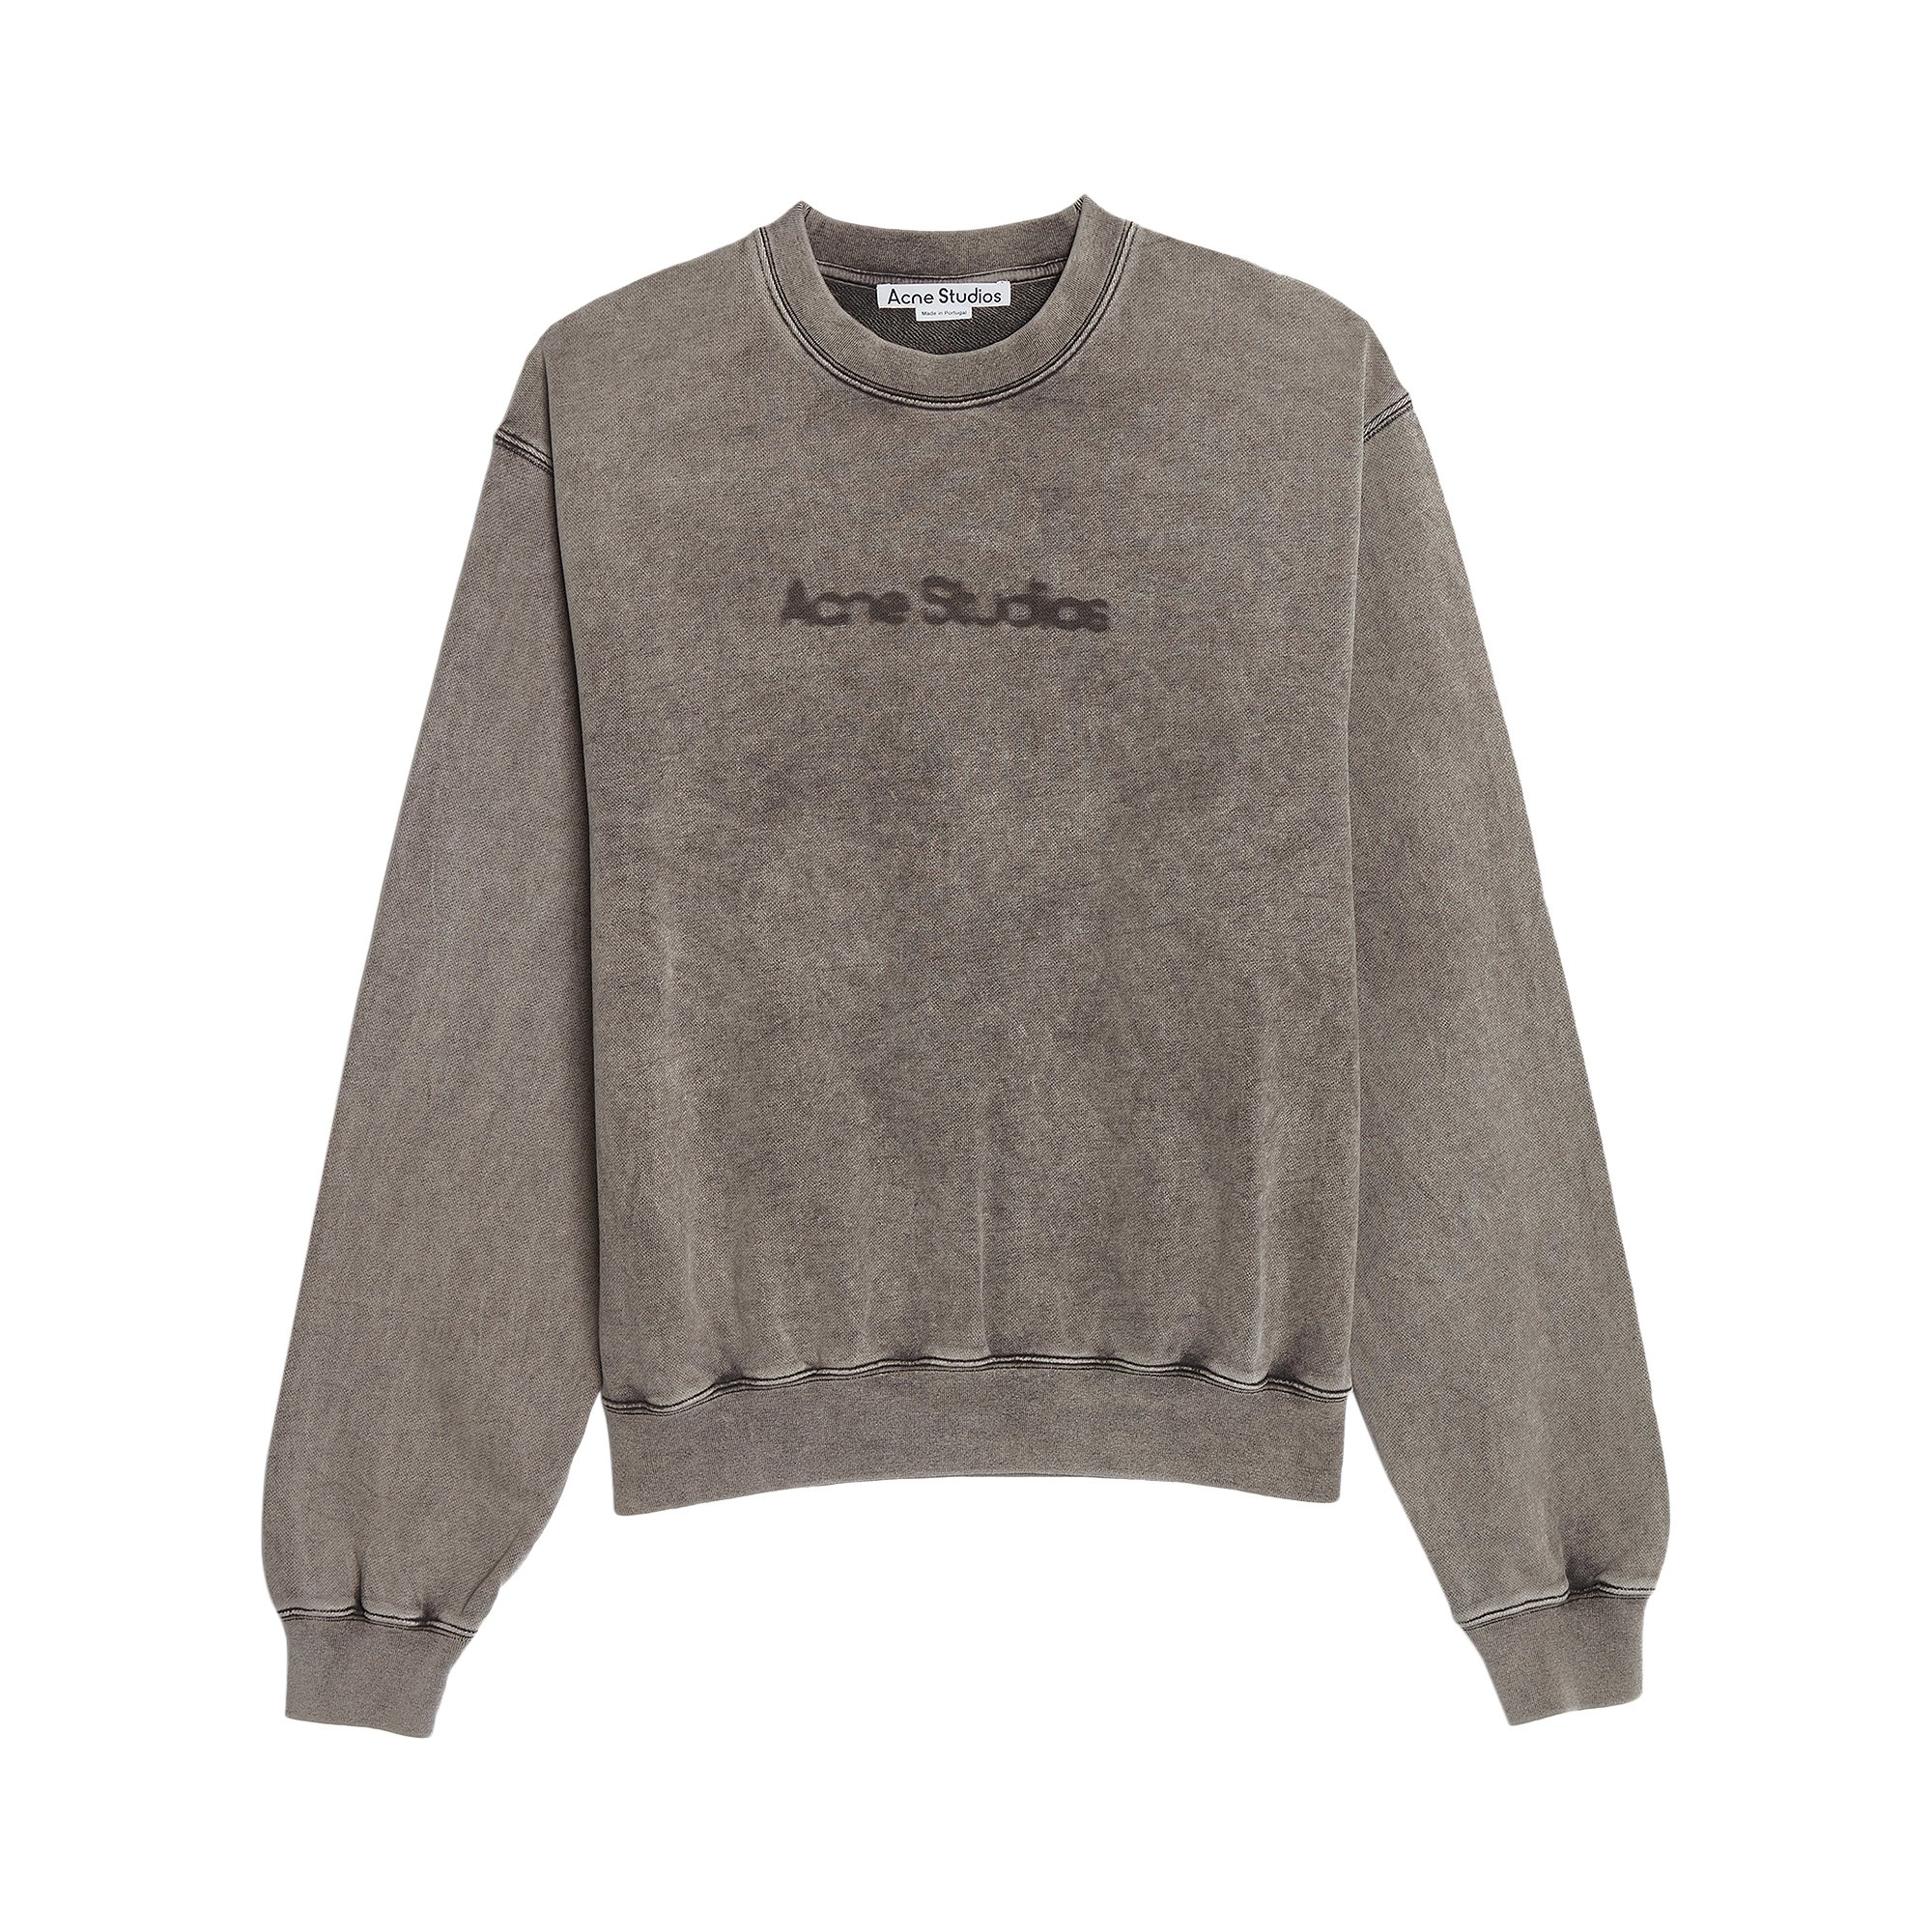 Buy Acne Studios Blurred Logo Sweater 'Faded Grey' - AI0141 GOAT